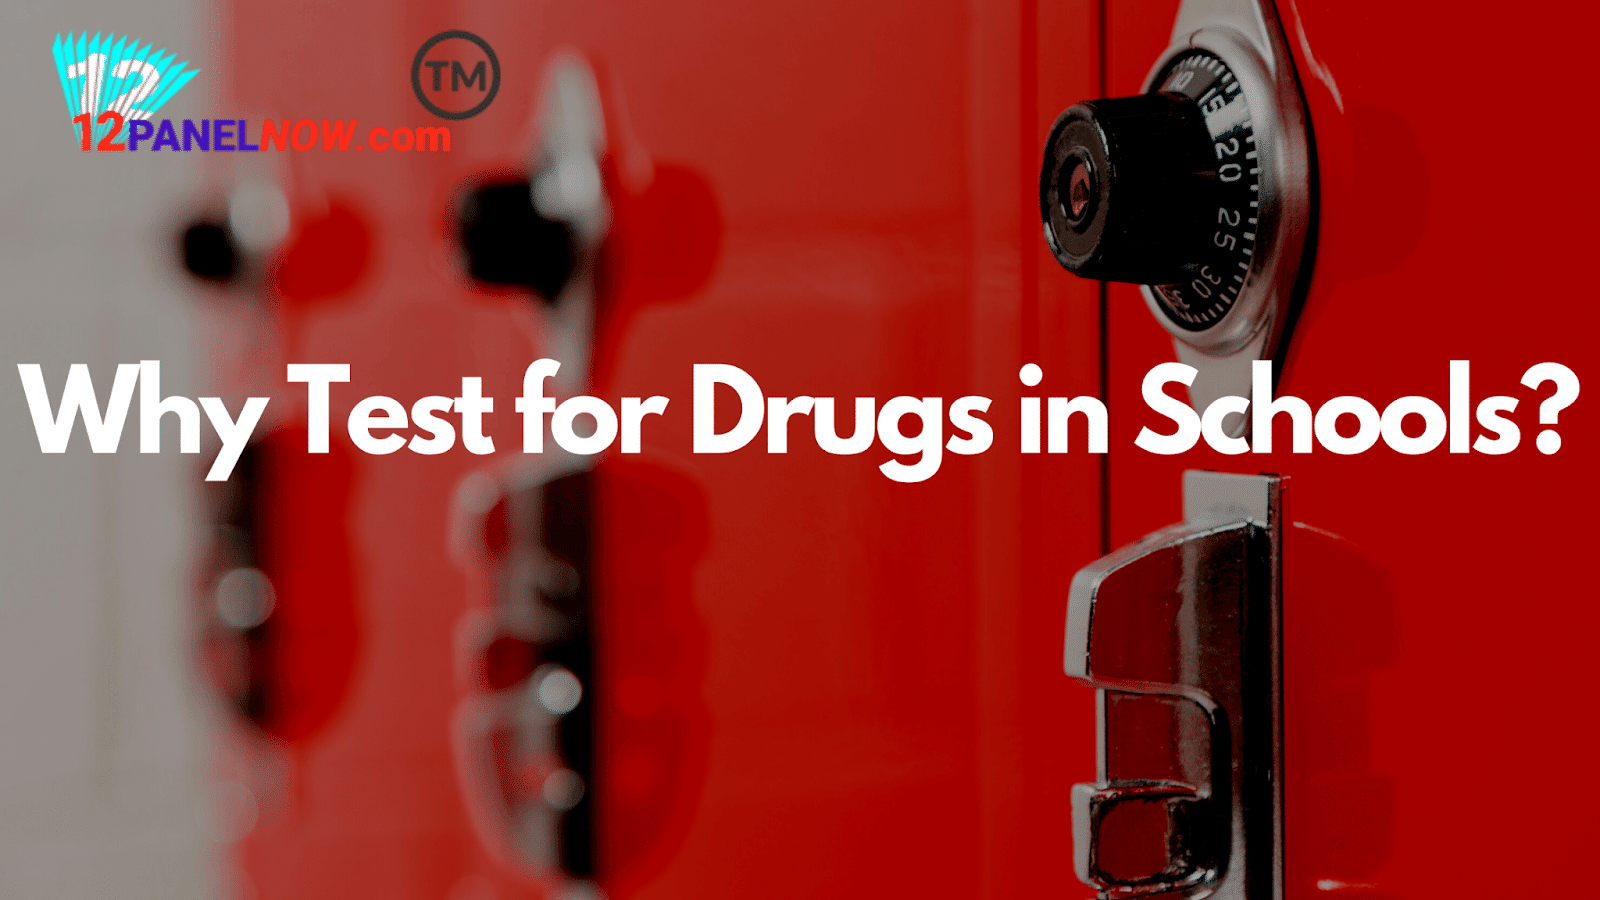 When Did Drug Testing Start in Schools?